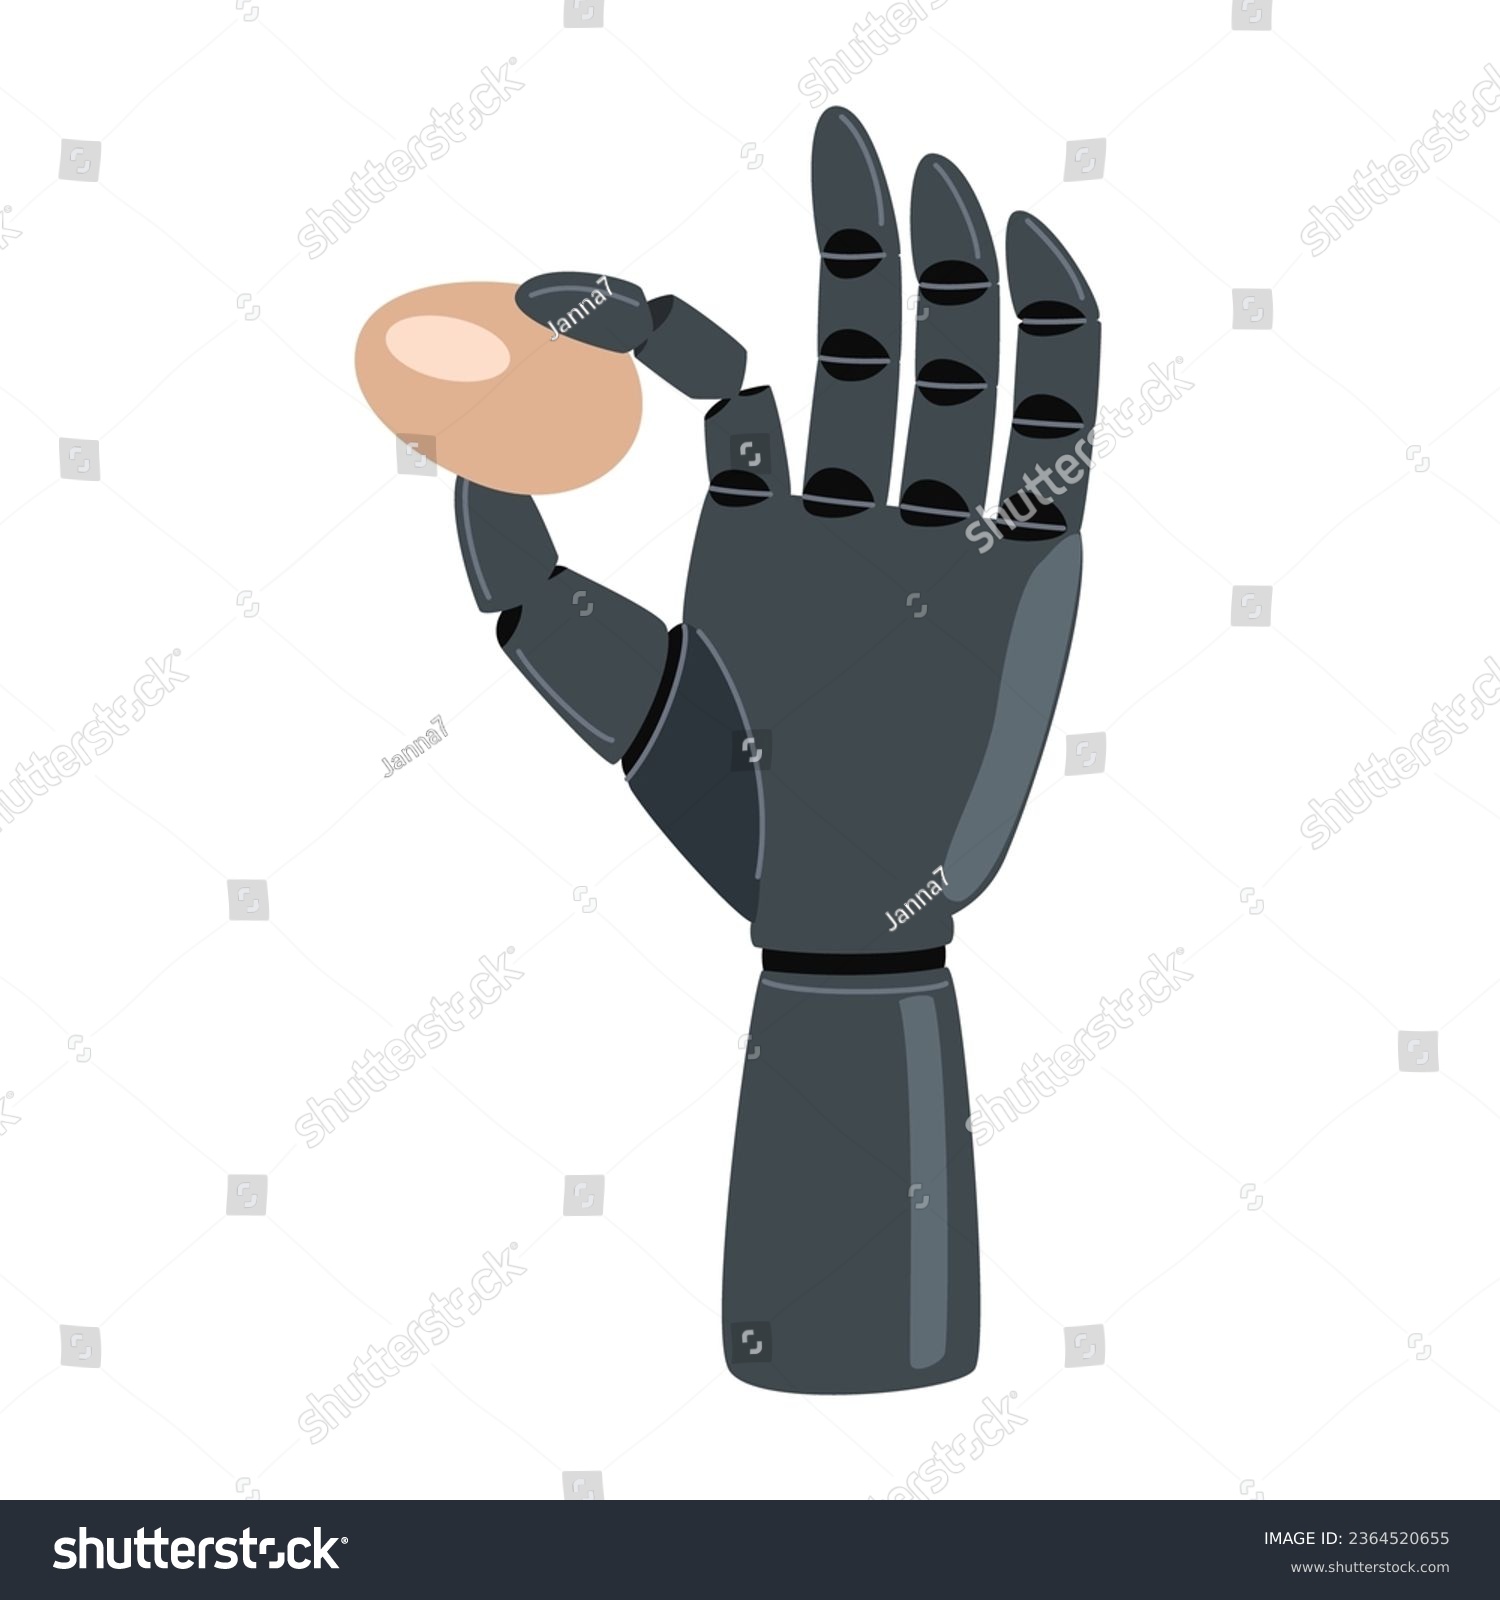 SVG of Prosthetic hand holding an egg. Concept mechanism, medicine, disability, equipment. Vector Illustration on white background. svg